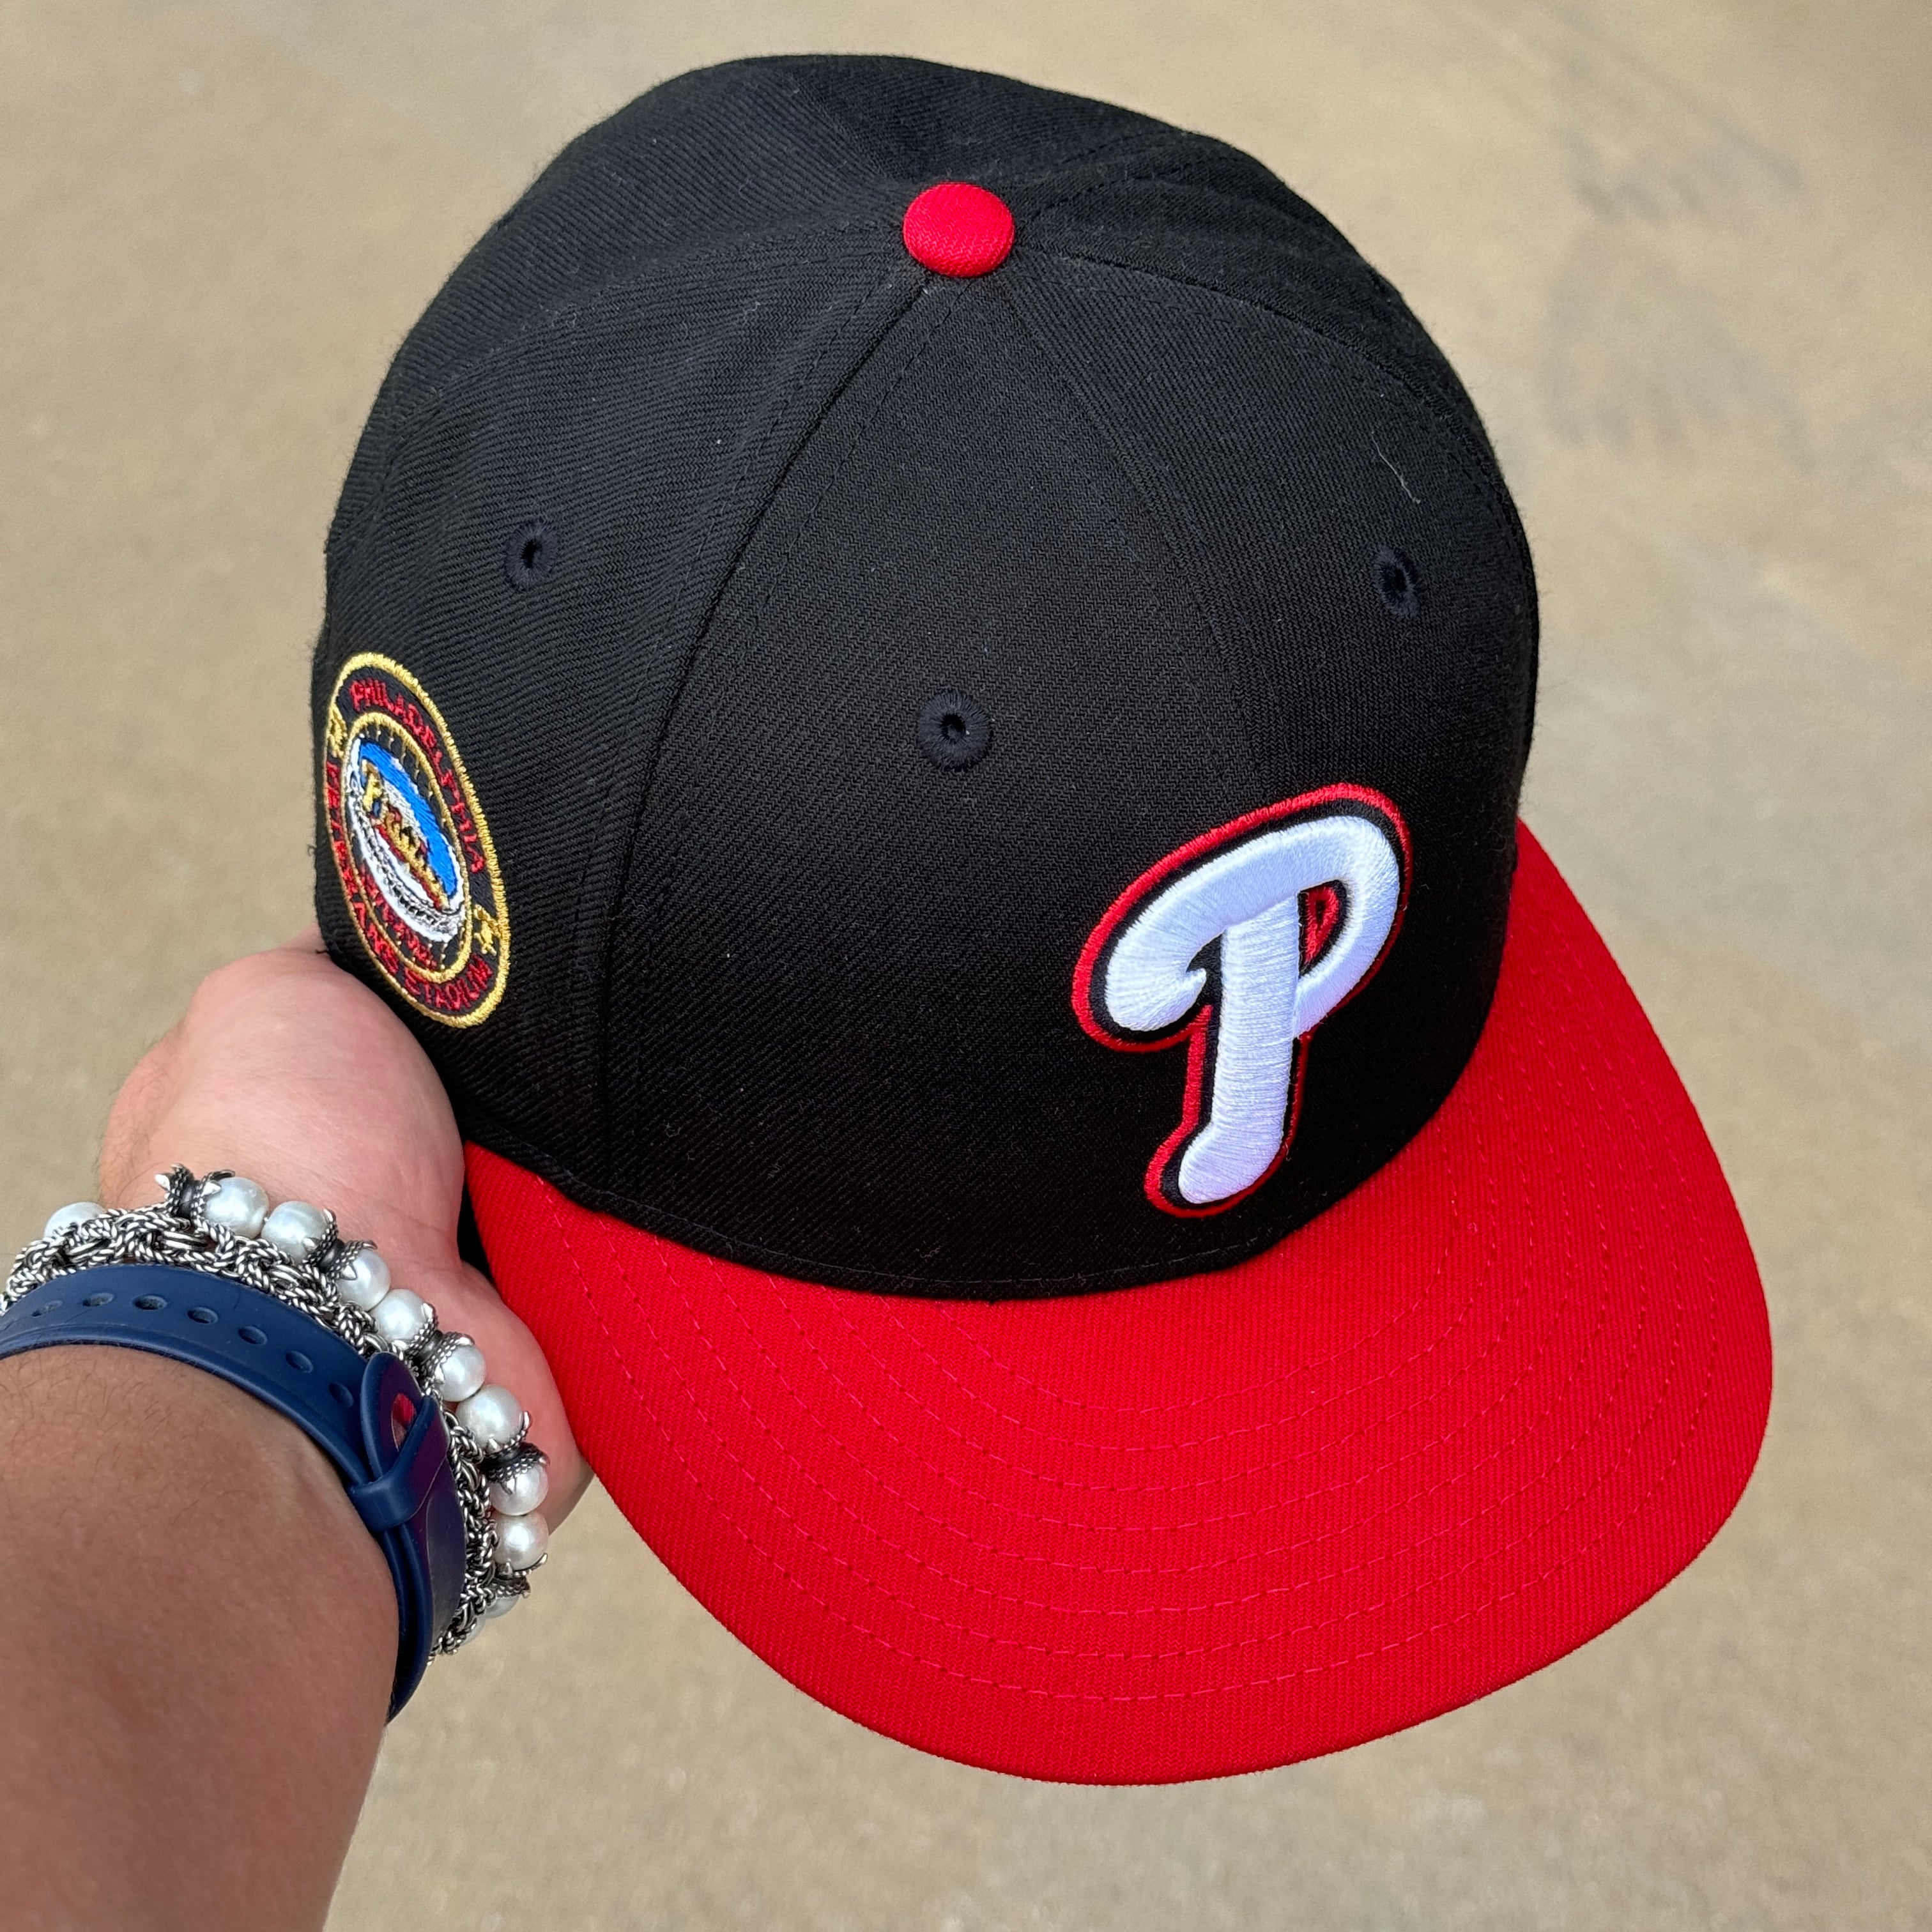 USED 1/8 Black Philadelphia Phillies Veterans Stadium 59fifty New Era Fitted Hat Cap